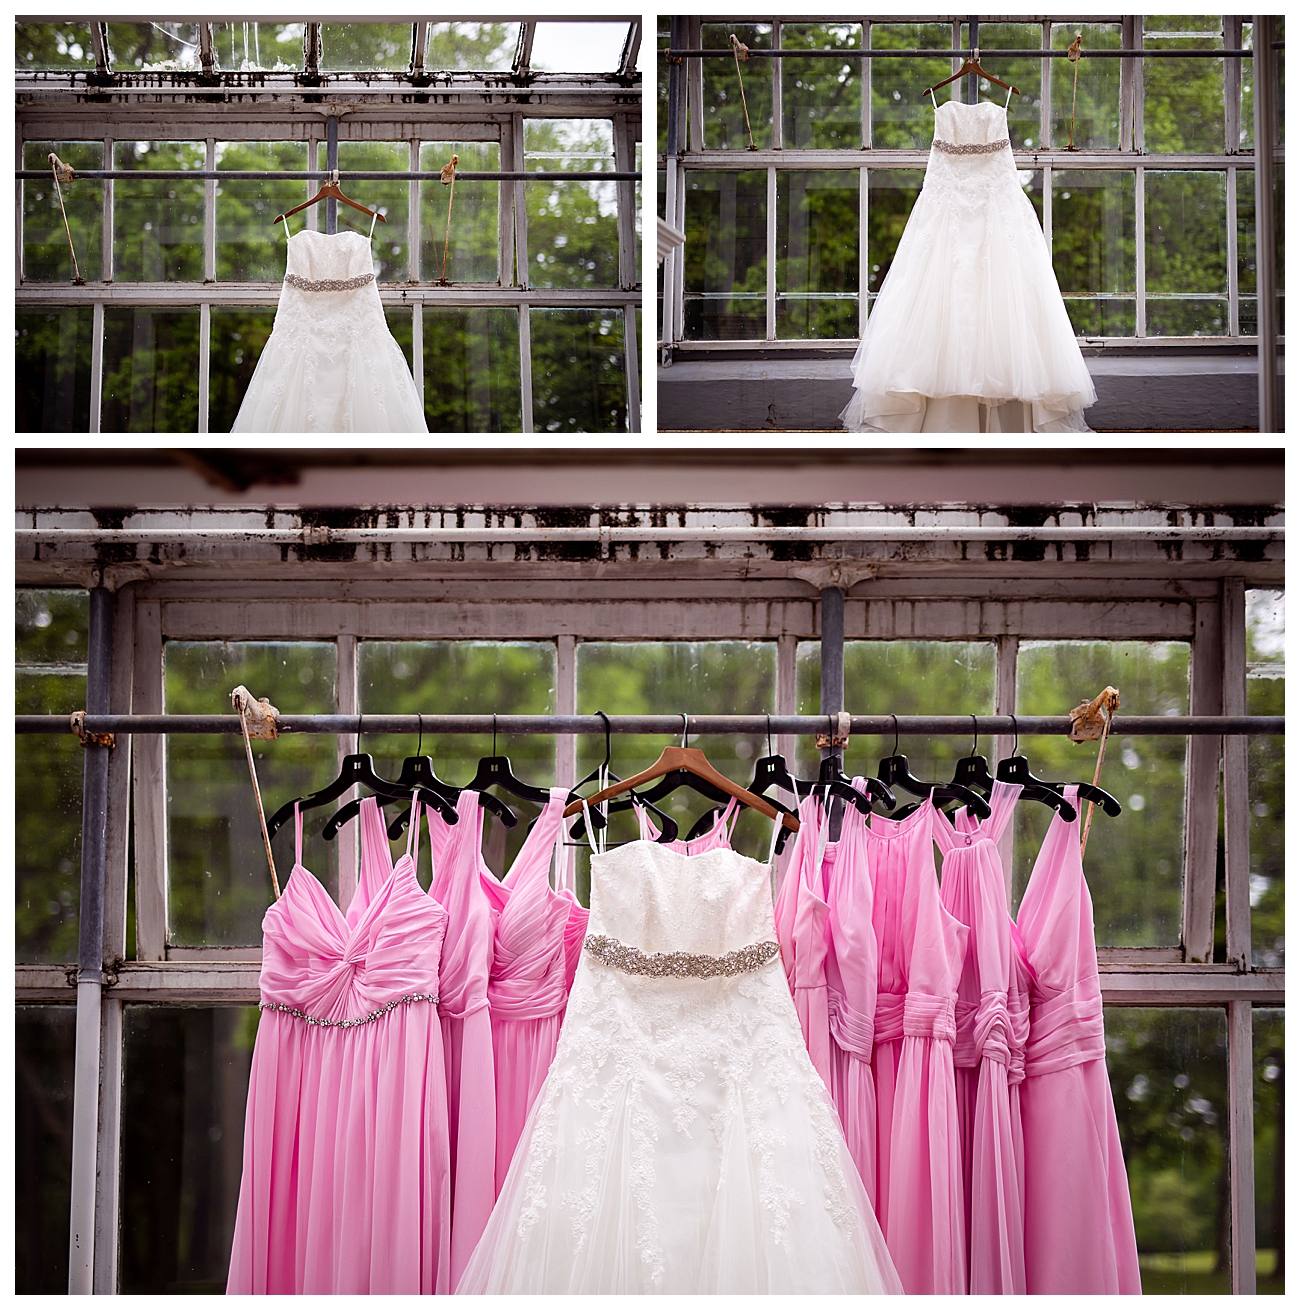 bridal dresses hanging in window